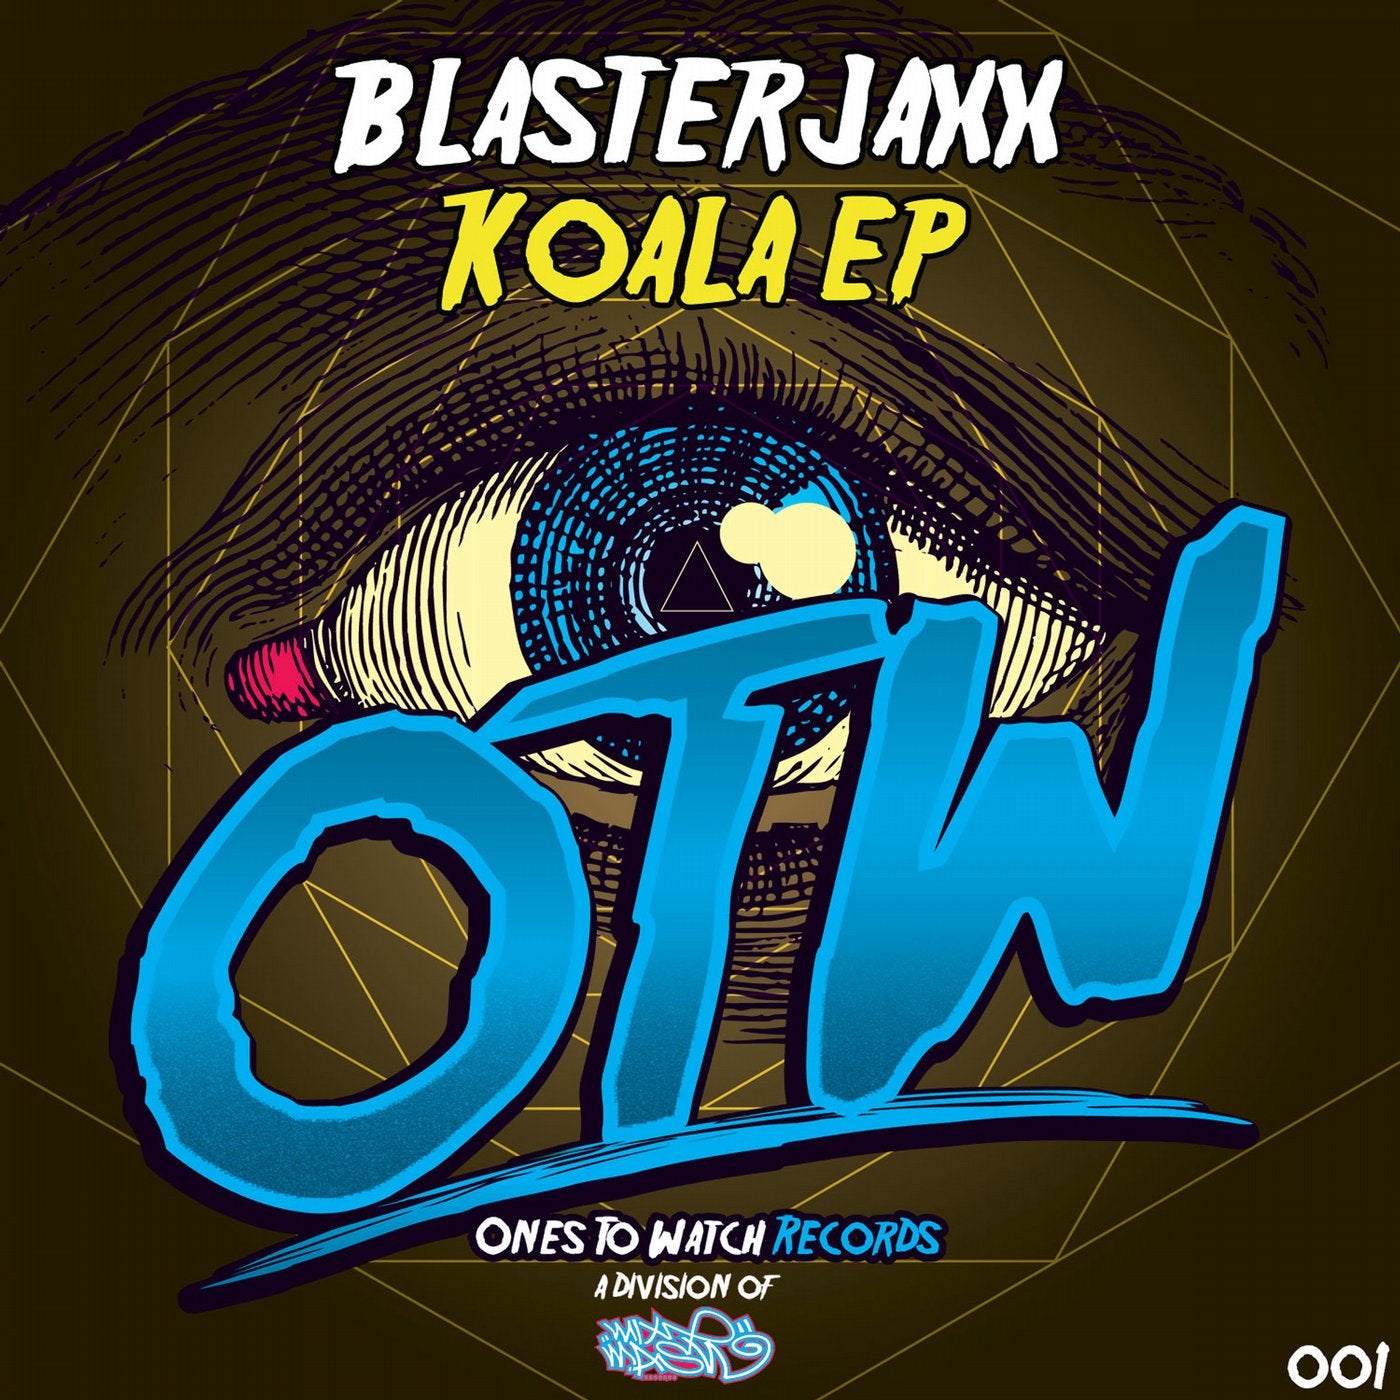 Blasterjaxx - Koala EP/Ones To Watch Records album art font